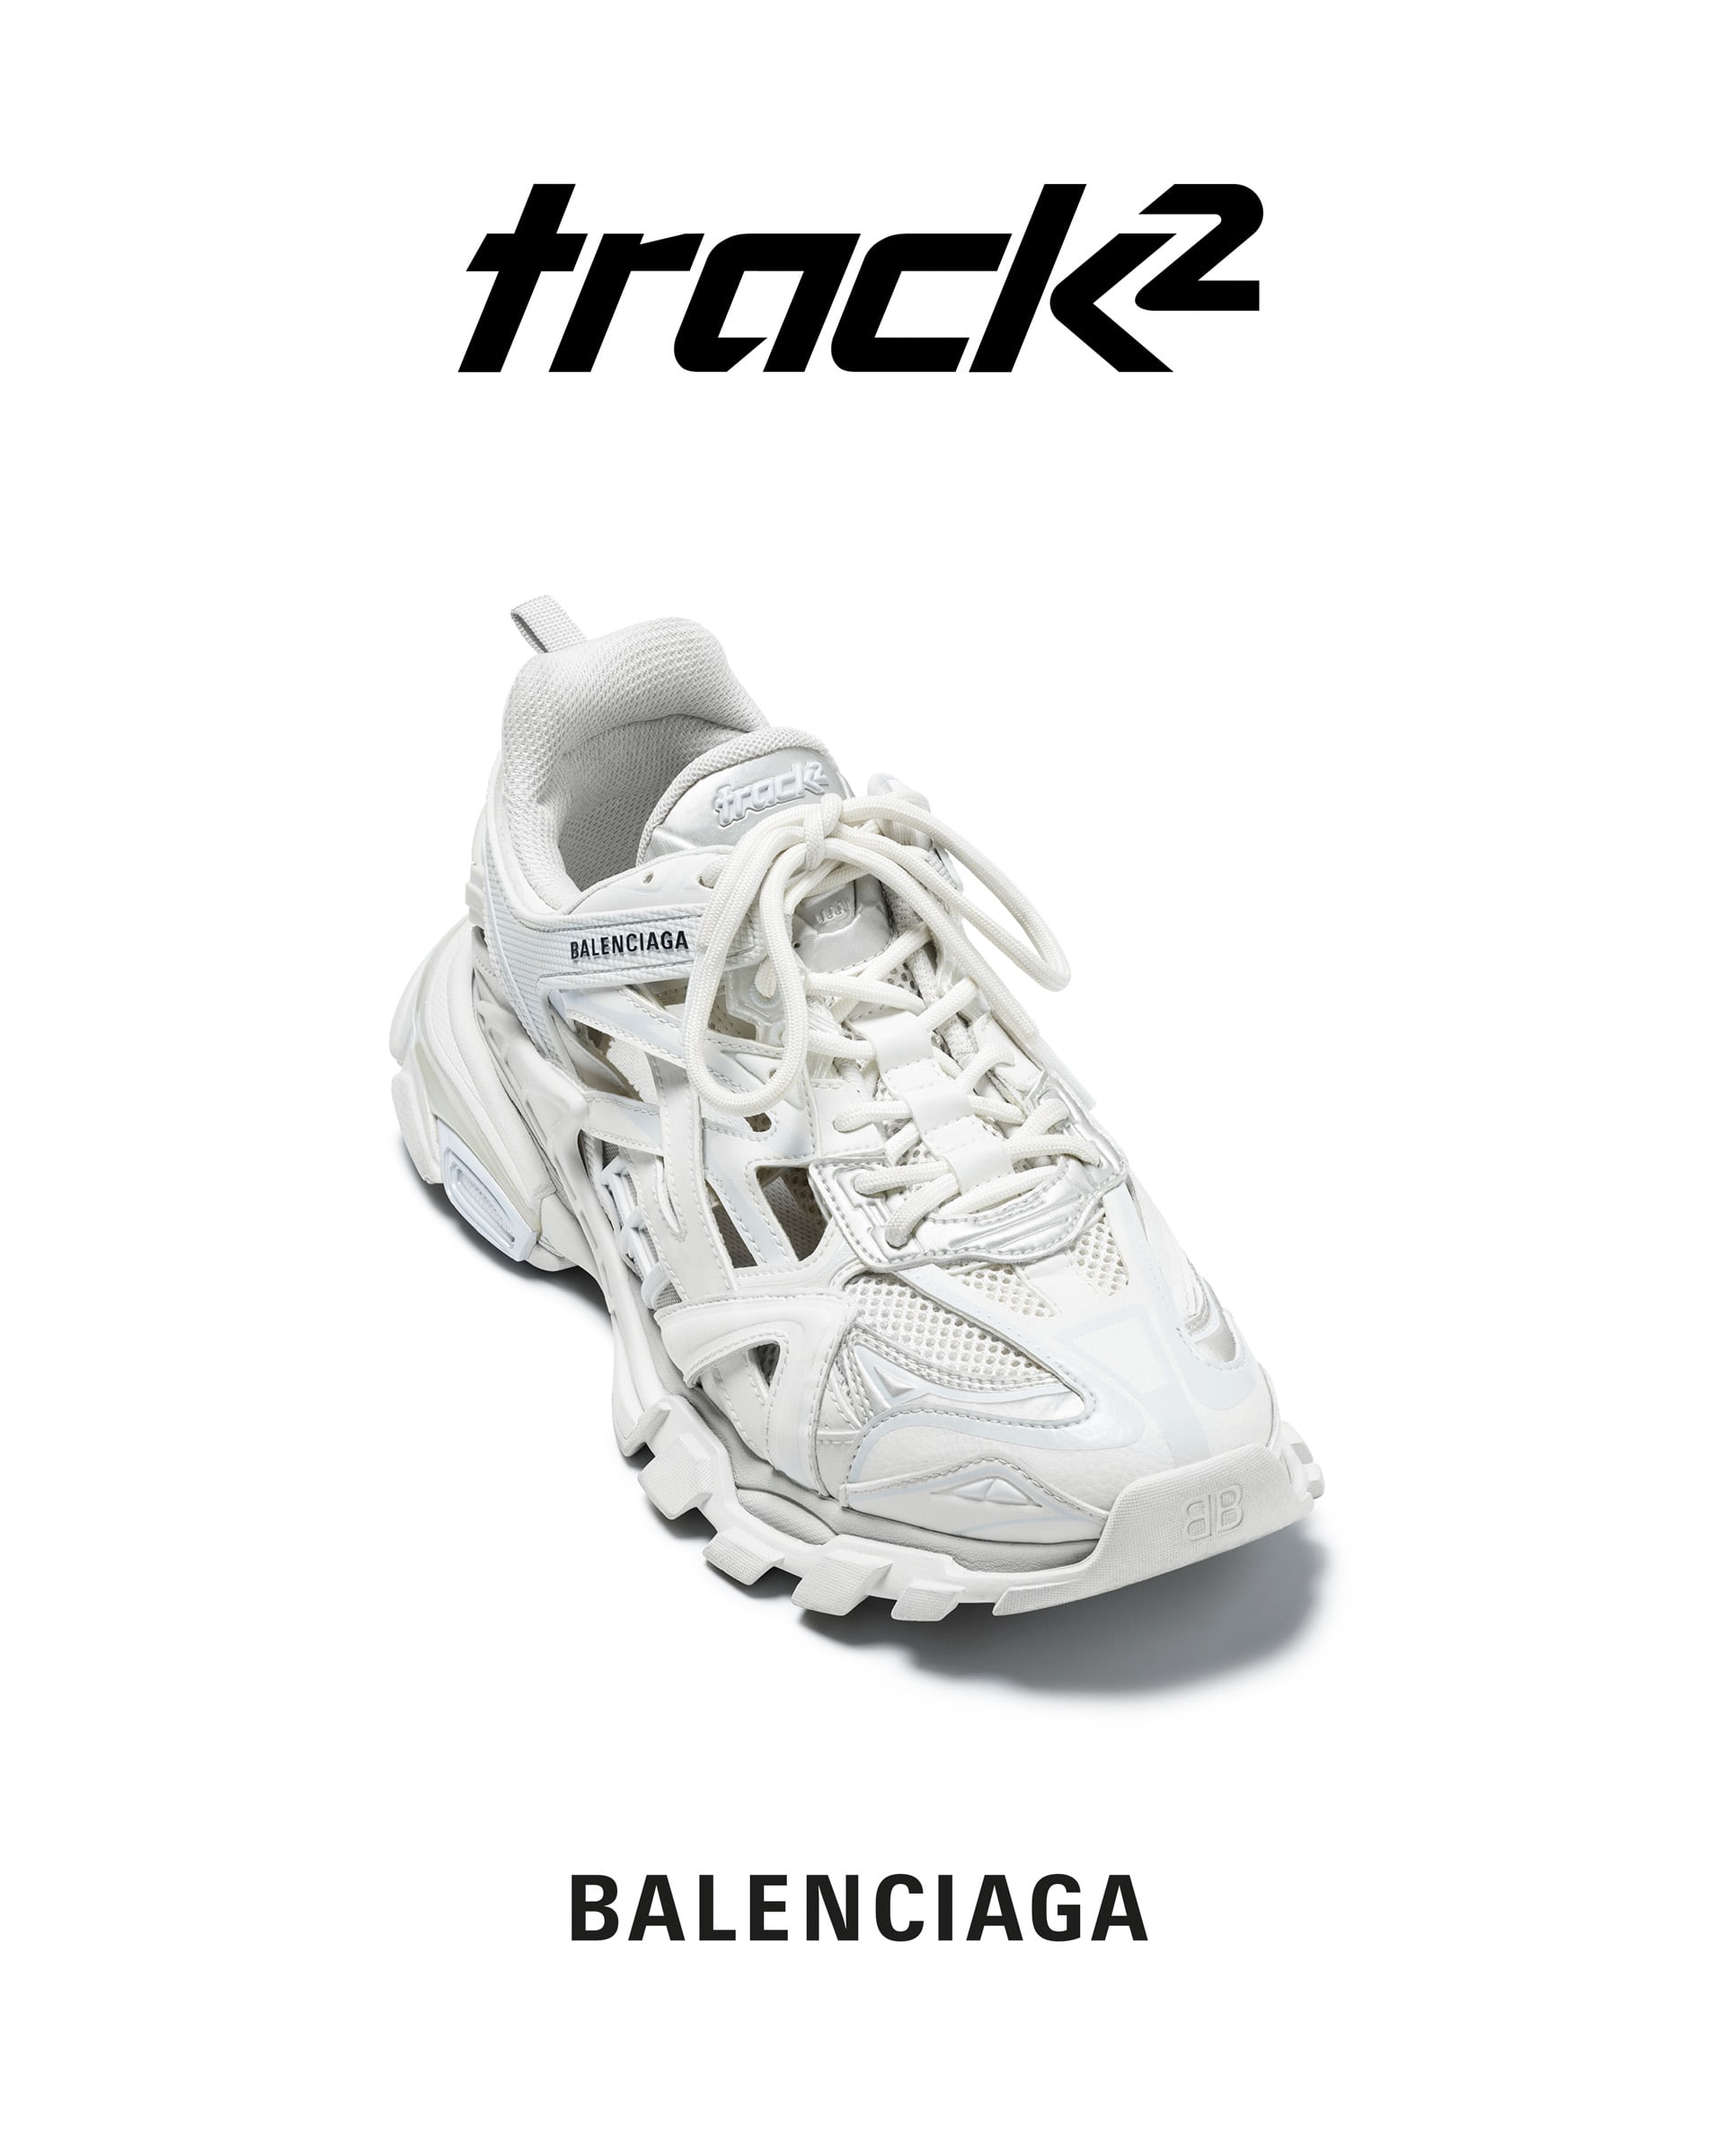 BALENCIAGA (バレンシアガ)TRACK.2